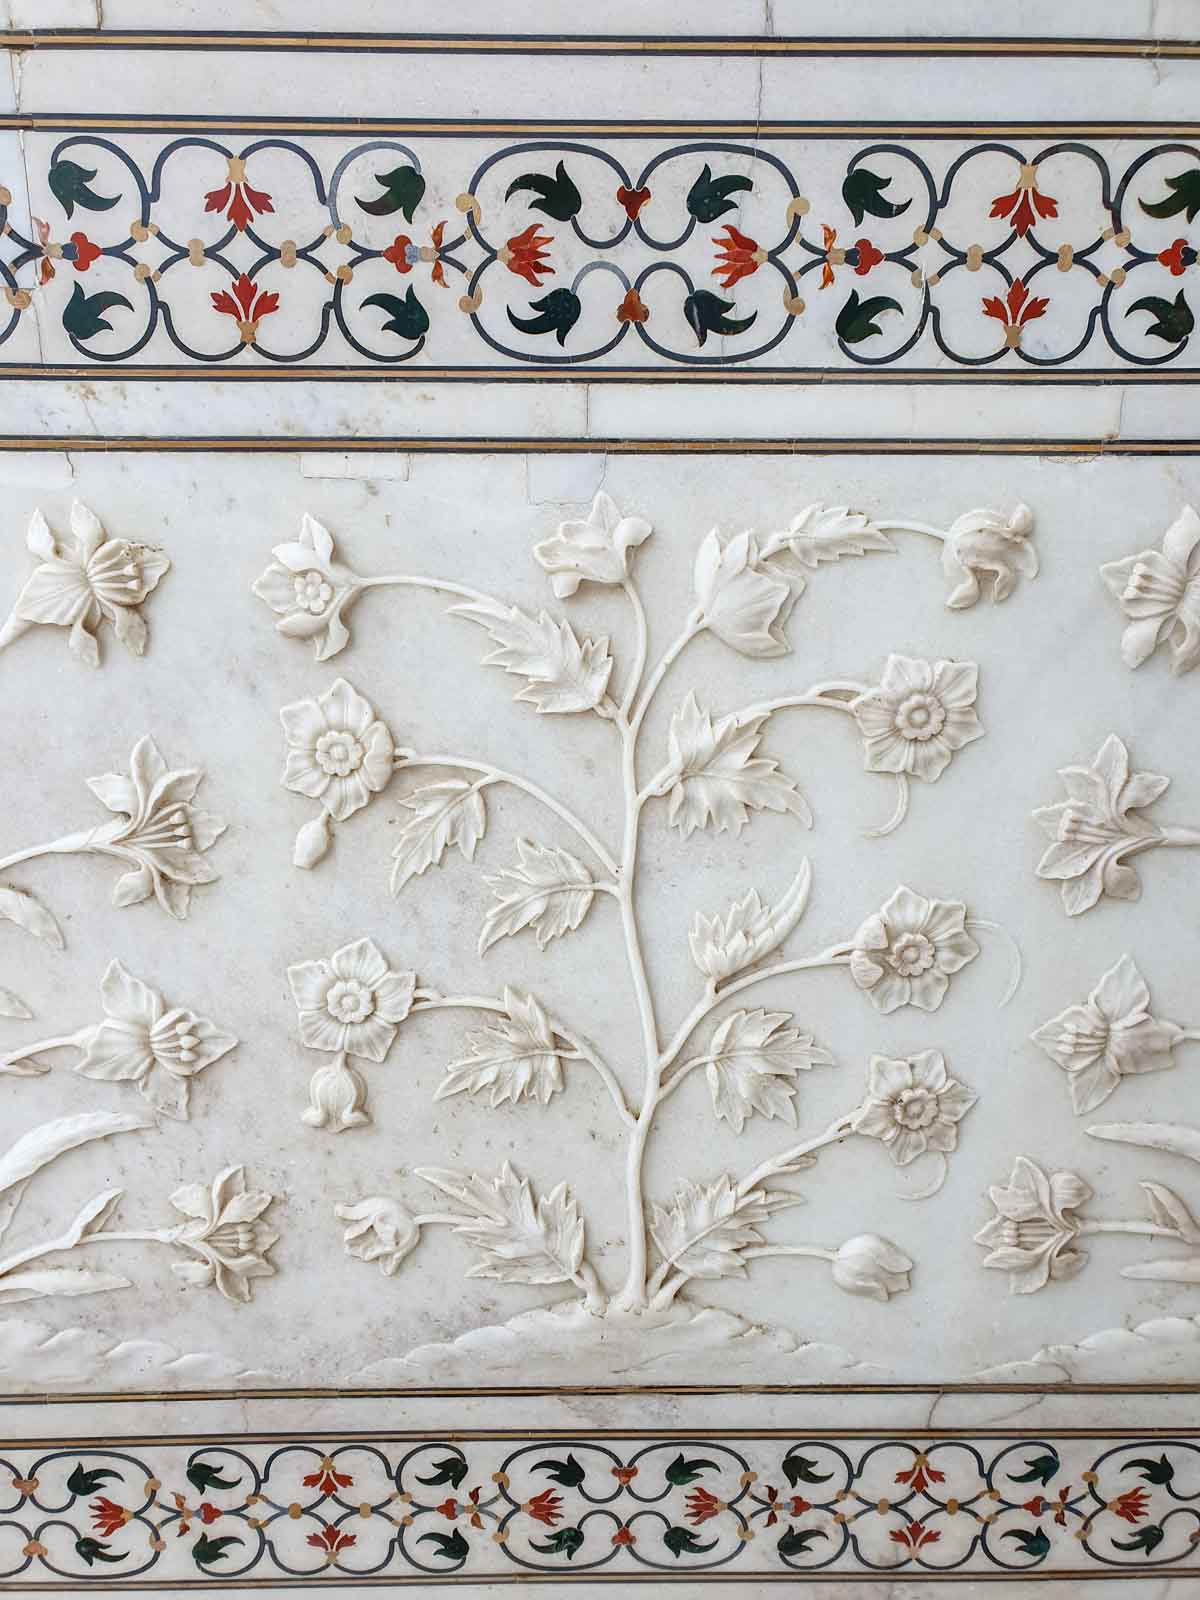 carved decorations on the Taj Mahal